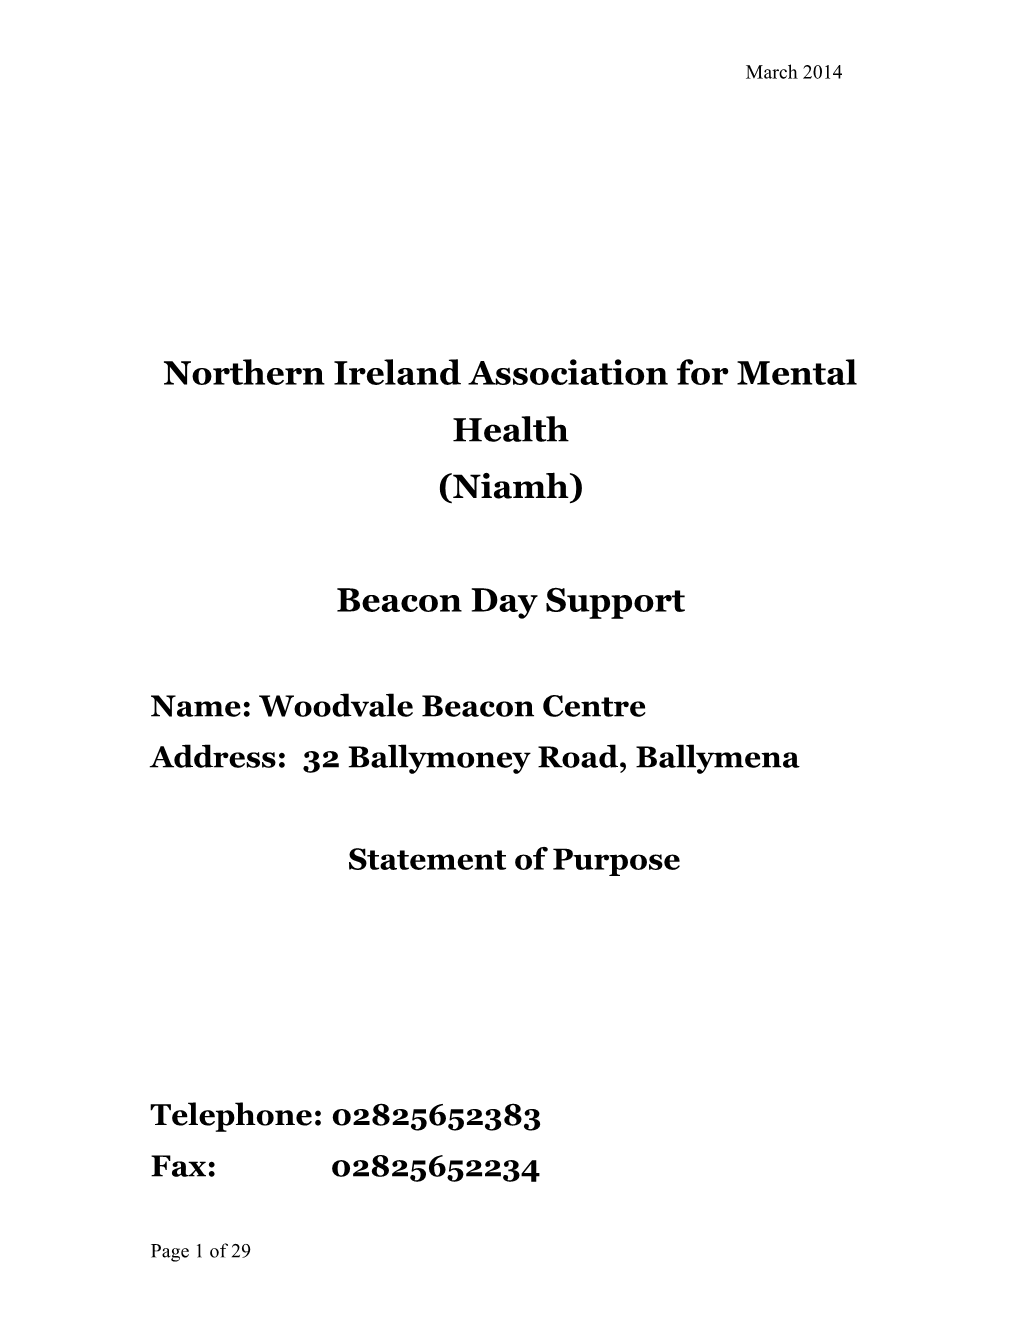 Northern Ireland Association for Mental Health s1